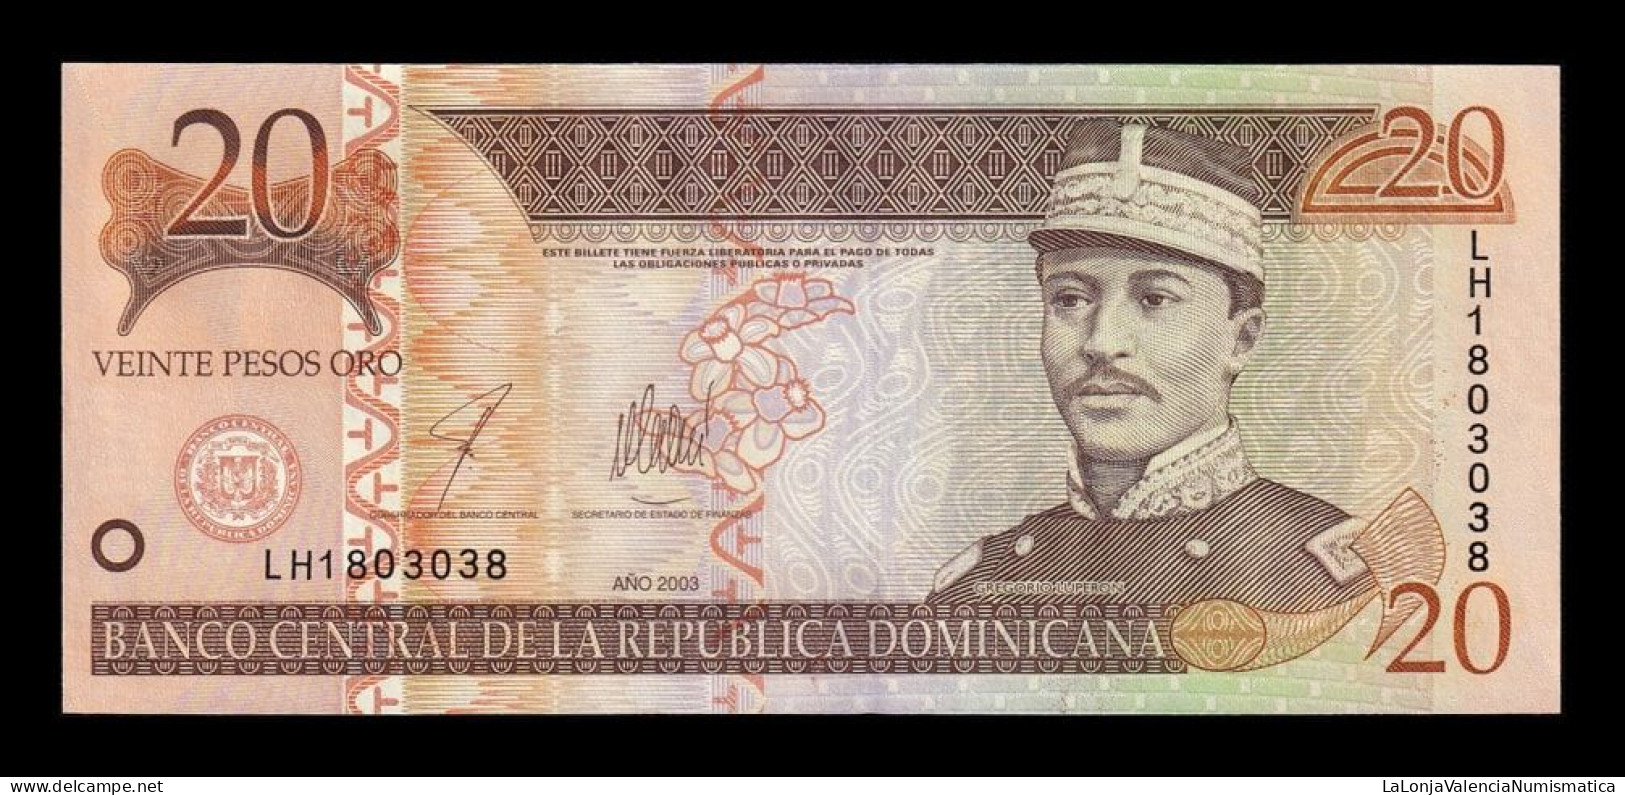 República Dominicana 20 Pesos Oro 2003 Pick 169c Sc Unc - Repubblica Dominicana